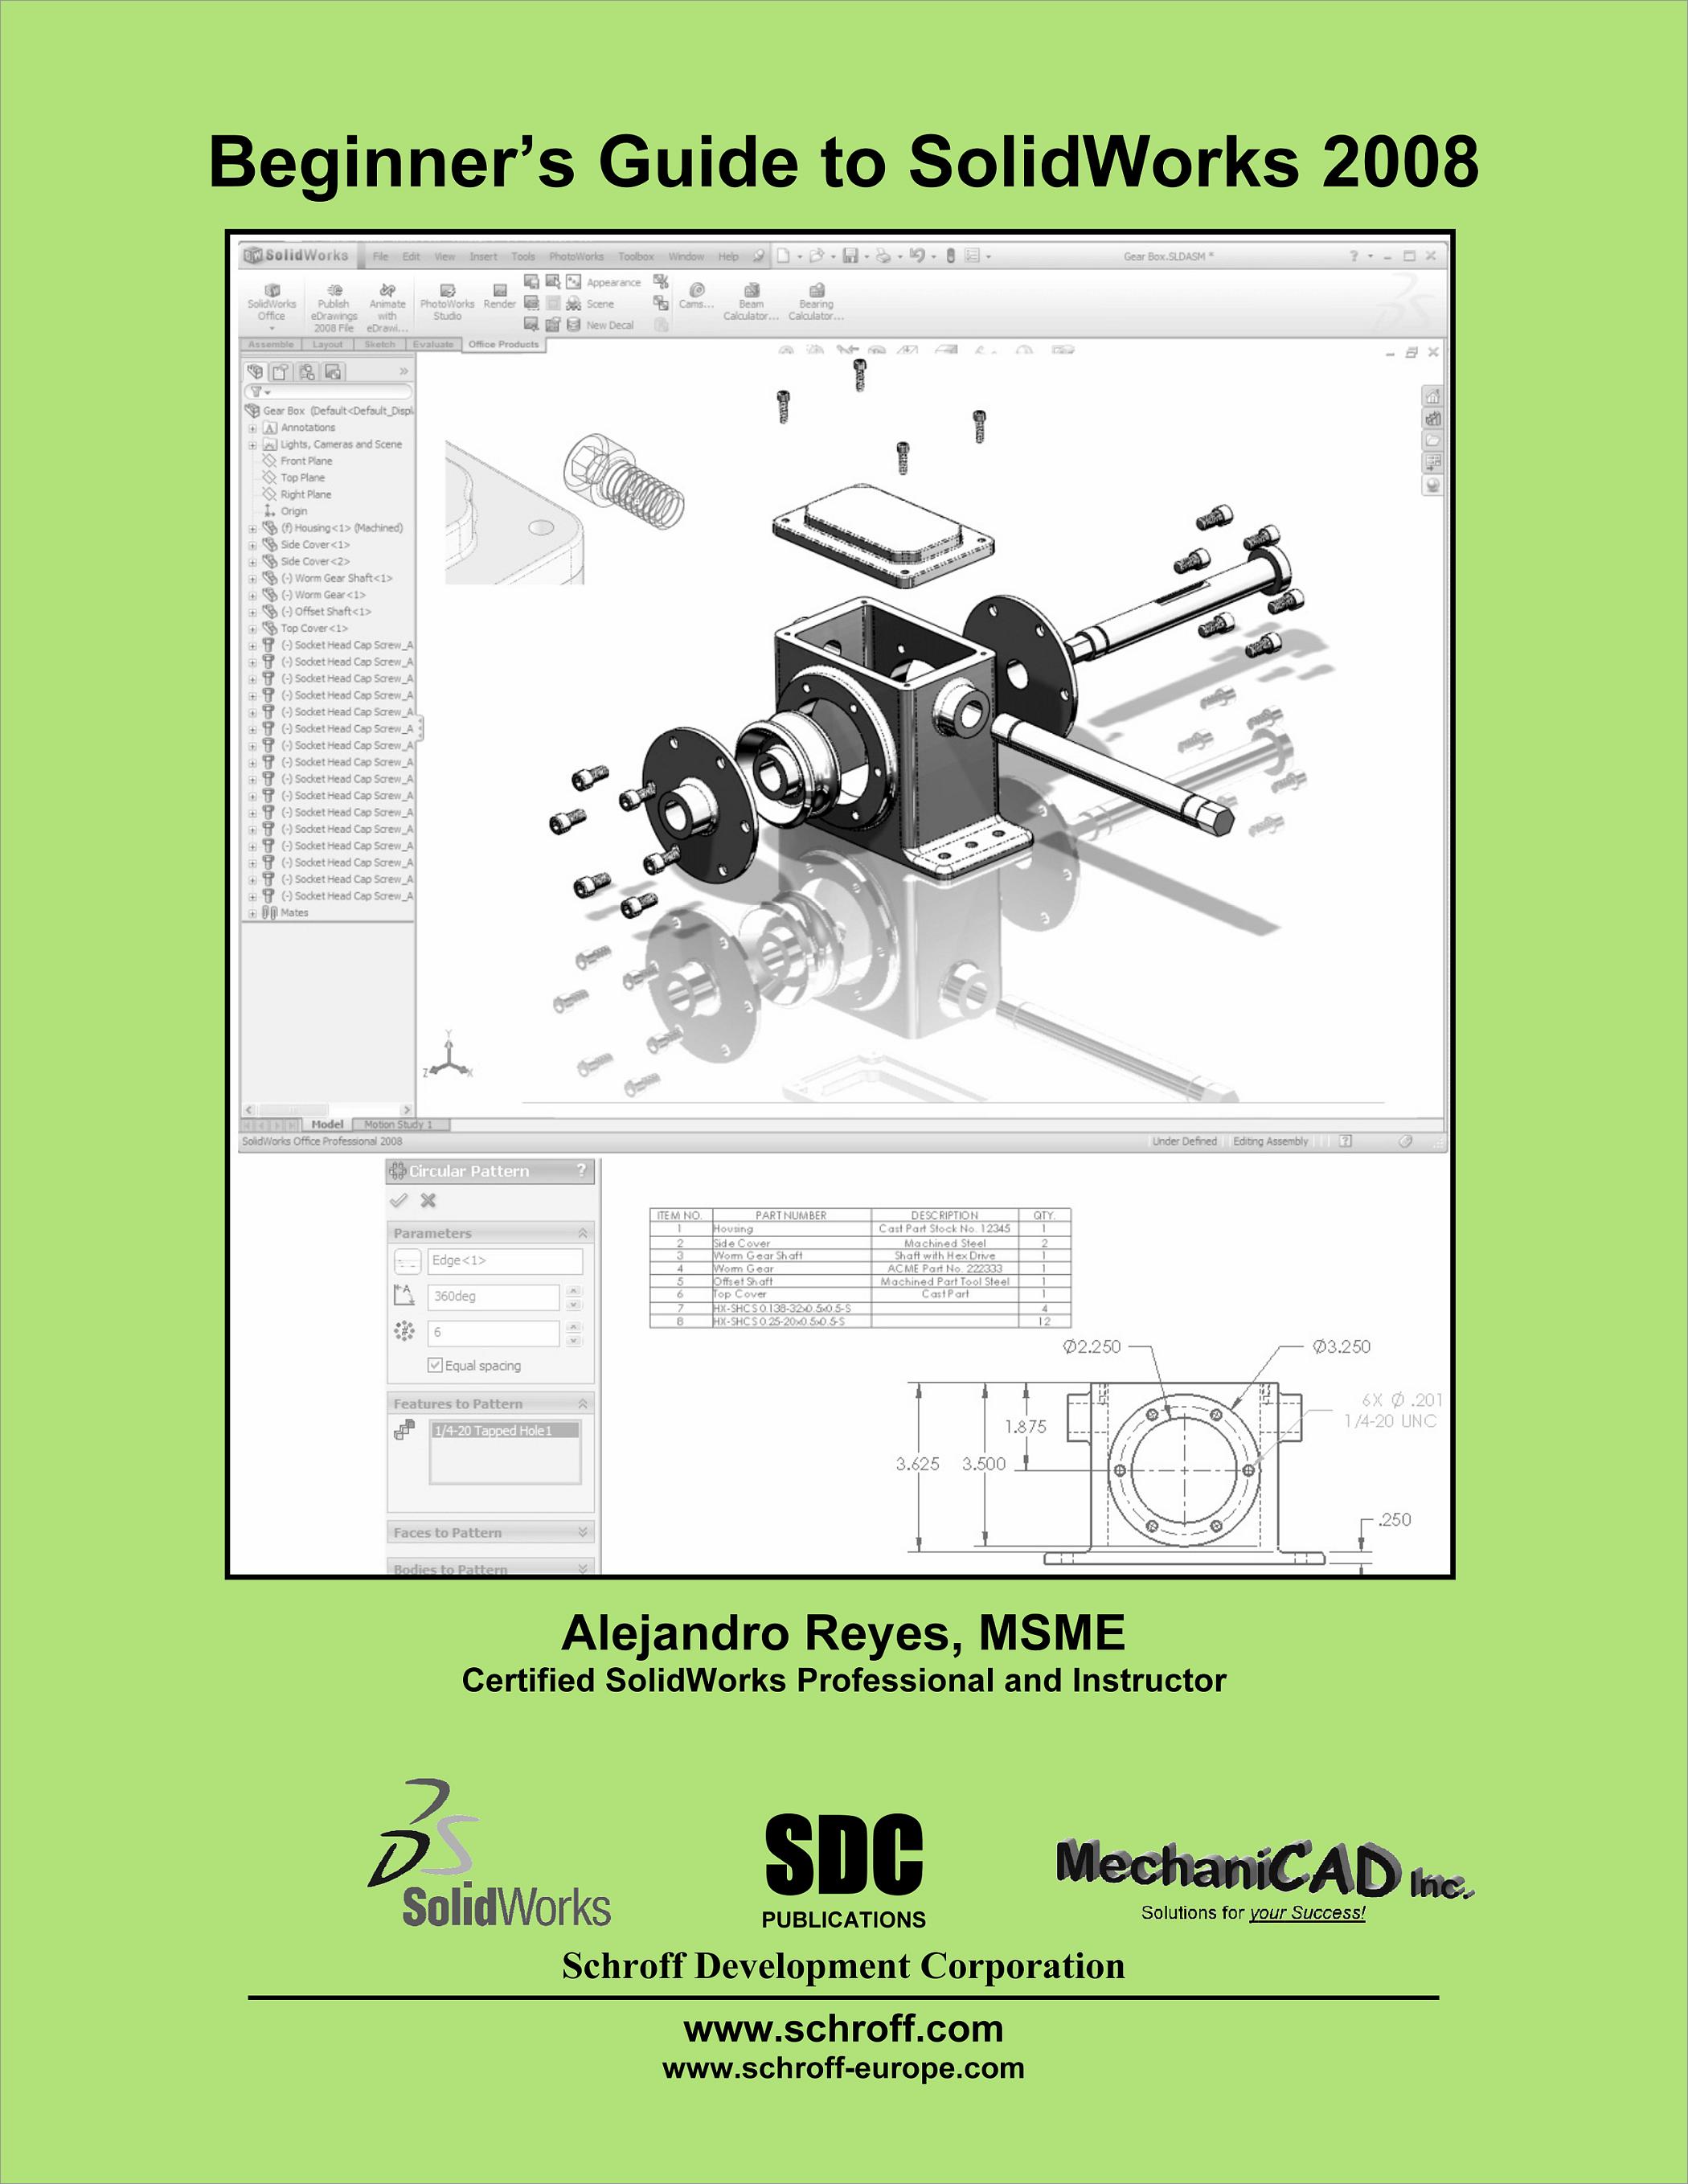 solidworks manual pdf download